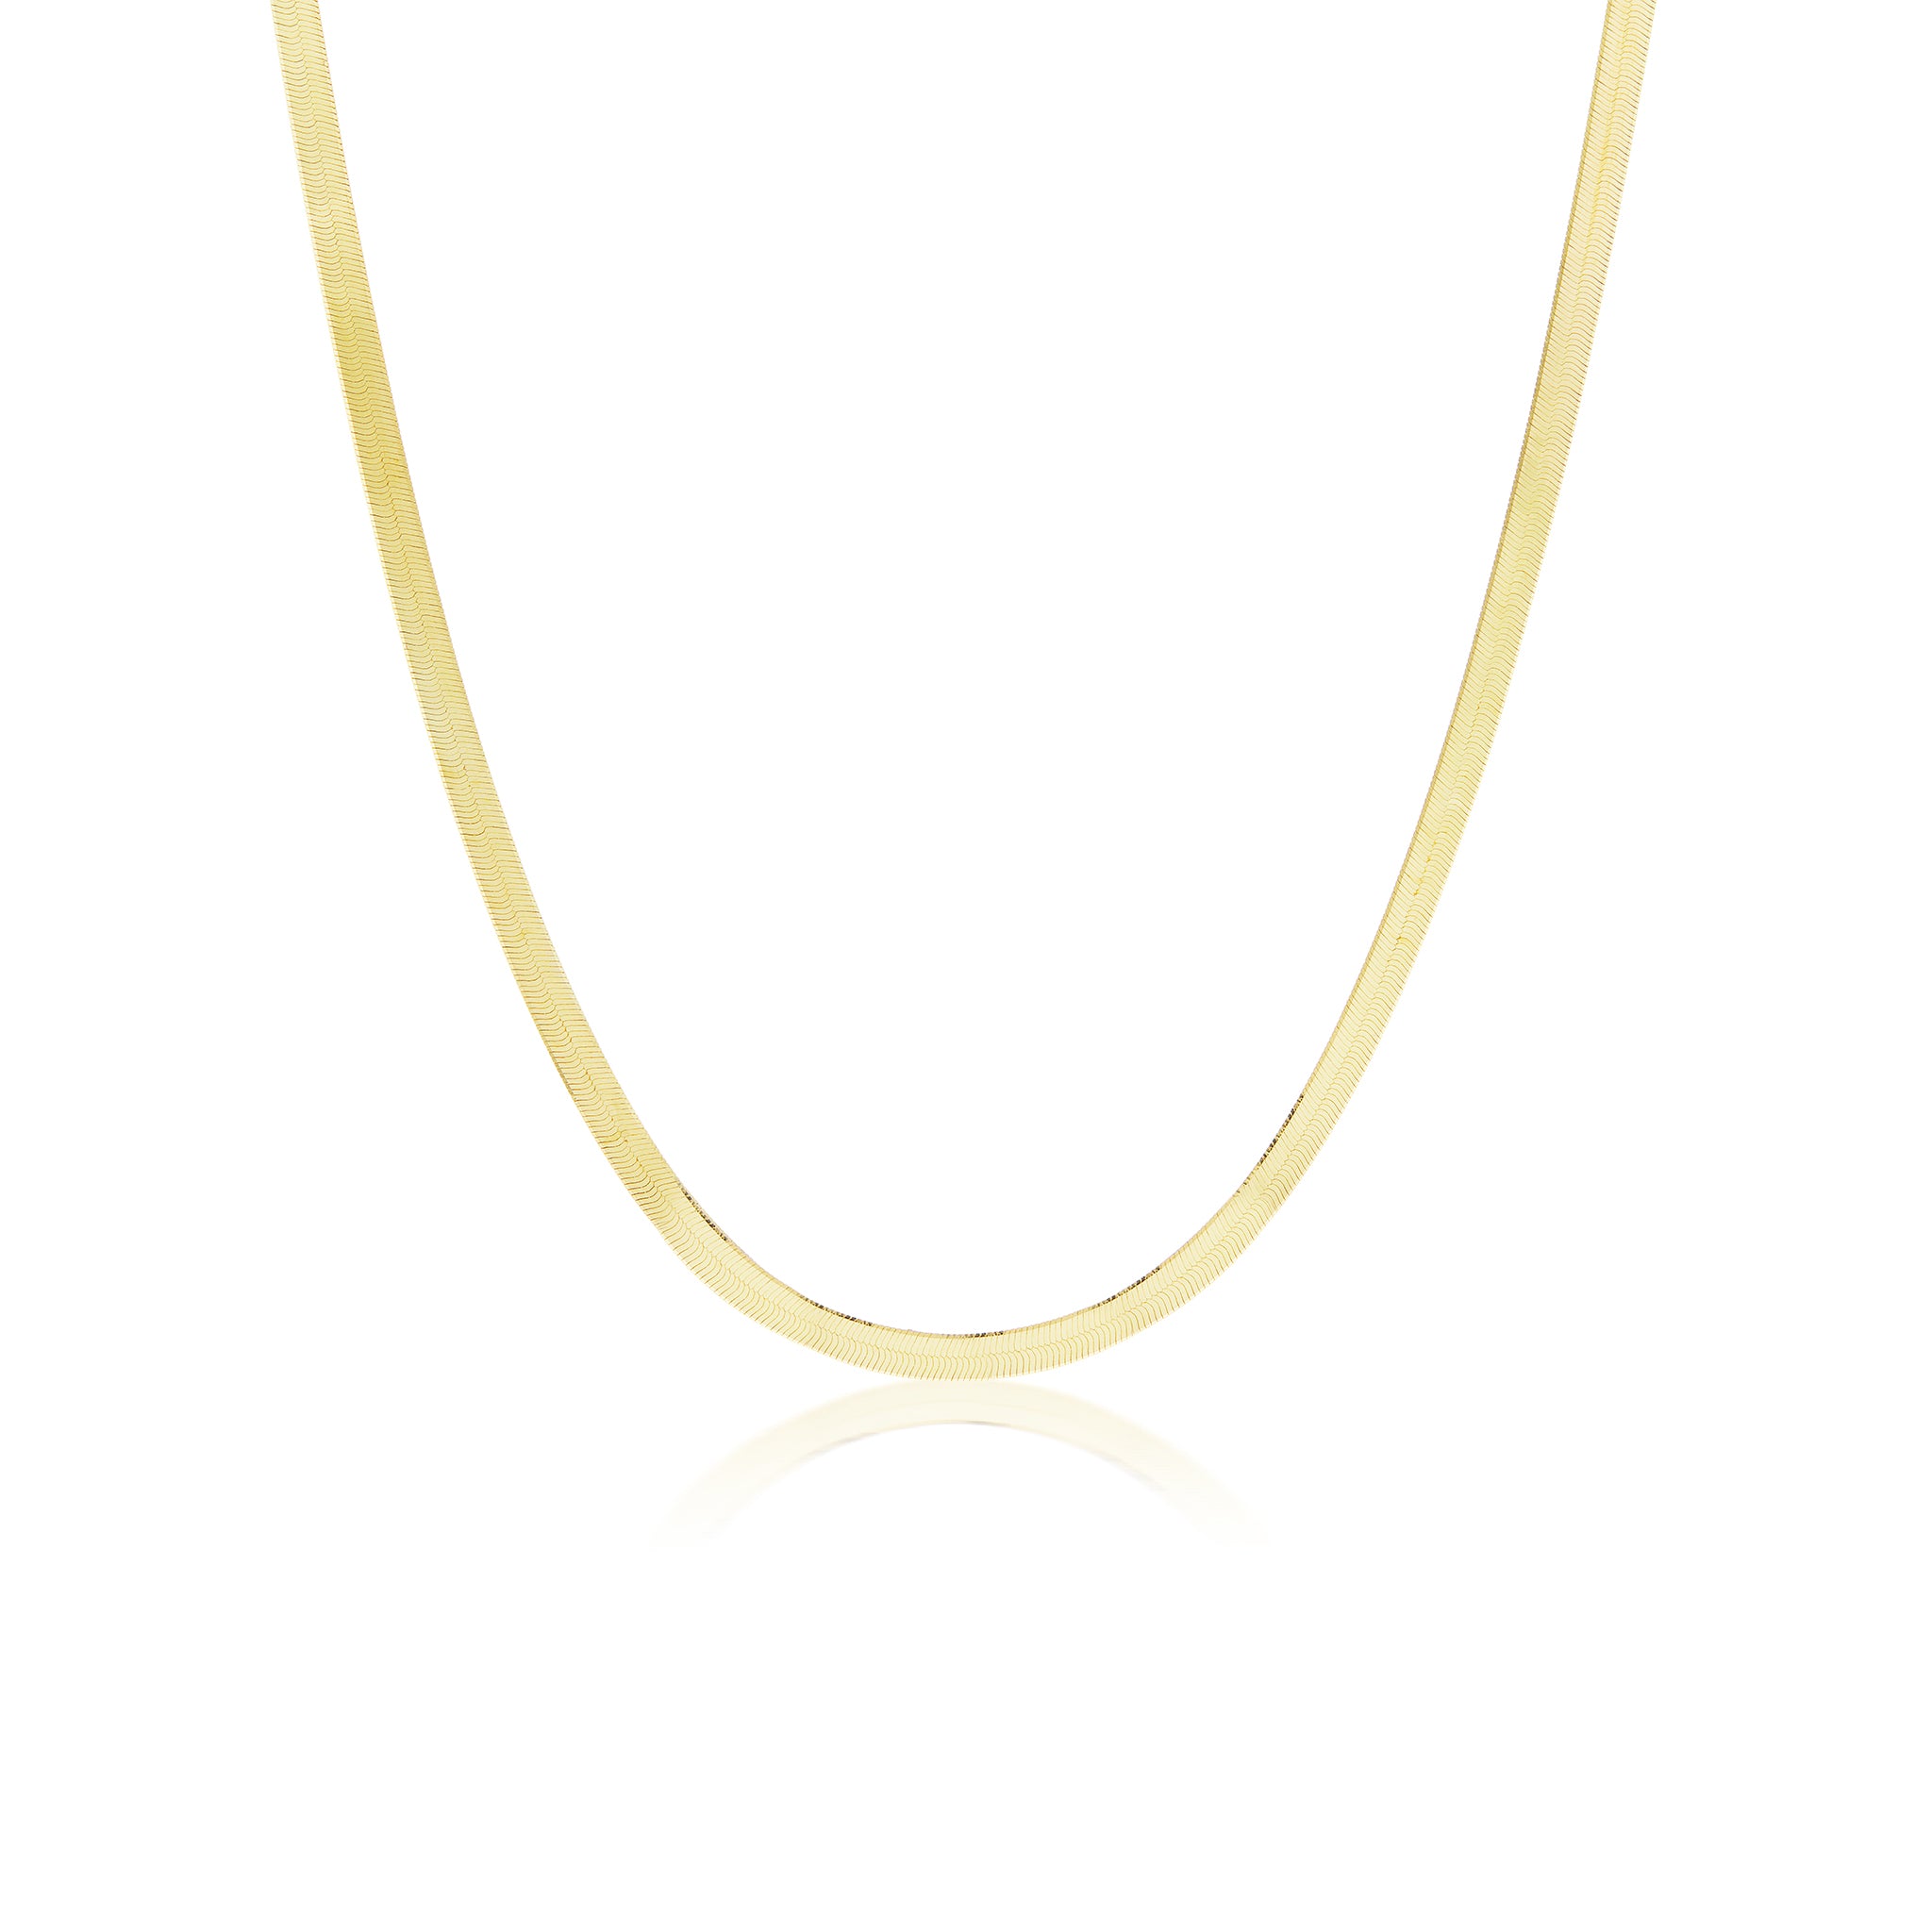 The Gold Herringbone Necklace